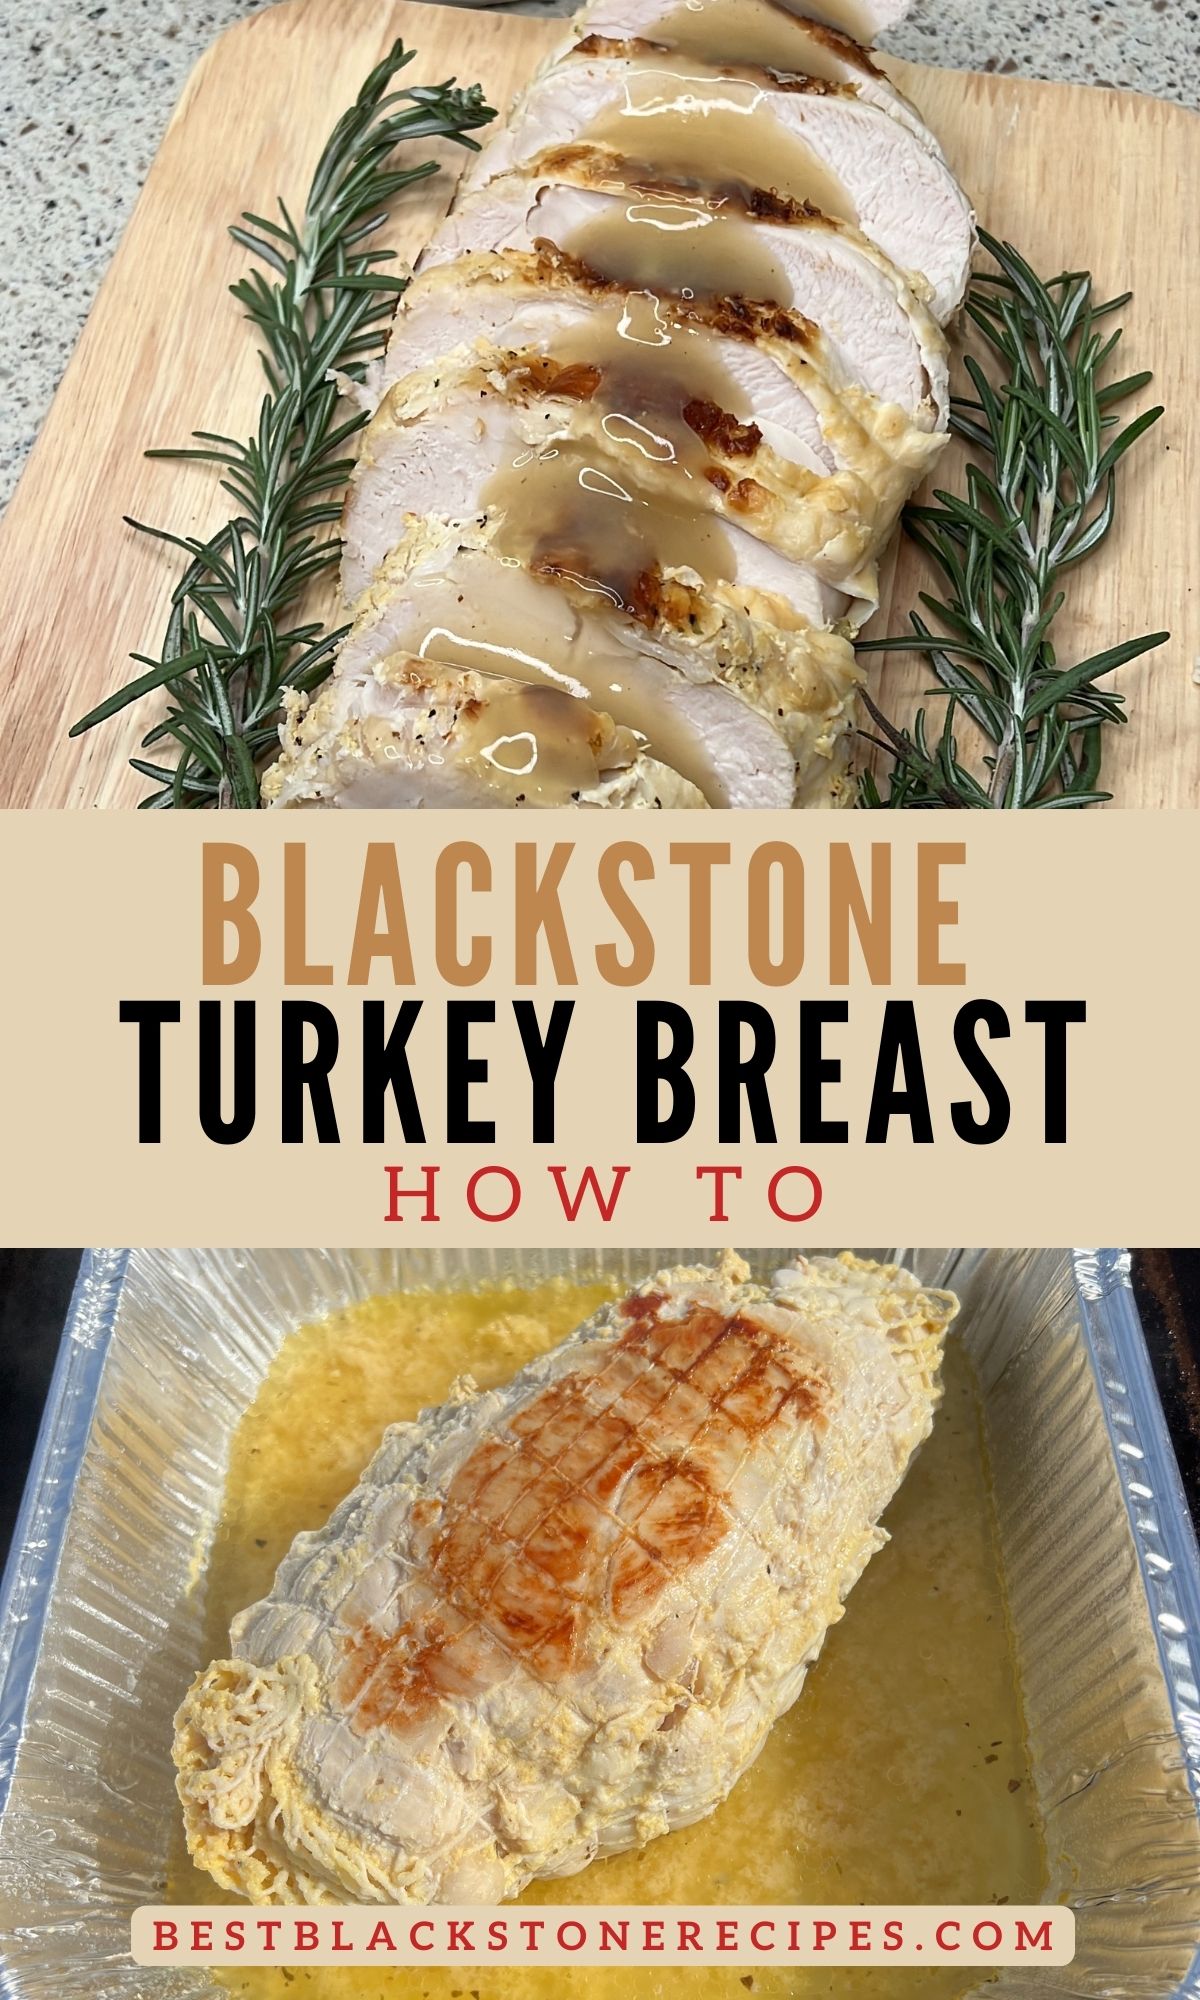 How to Make a Blackstone Turkey Breast